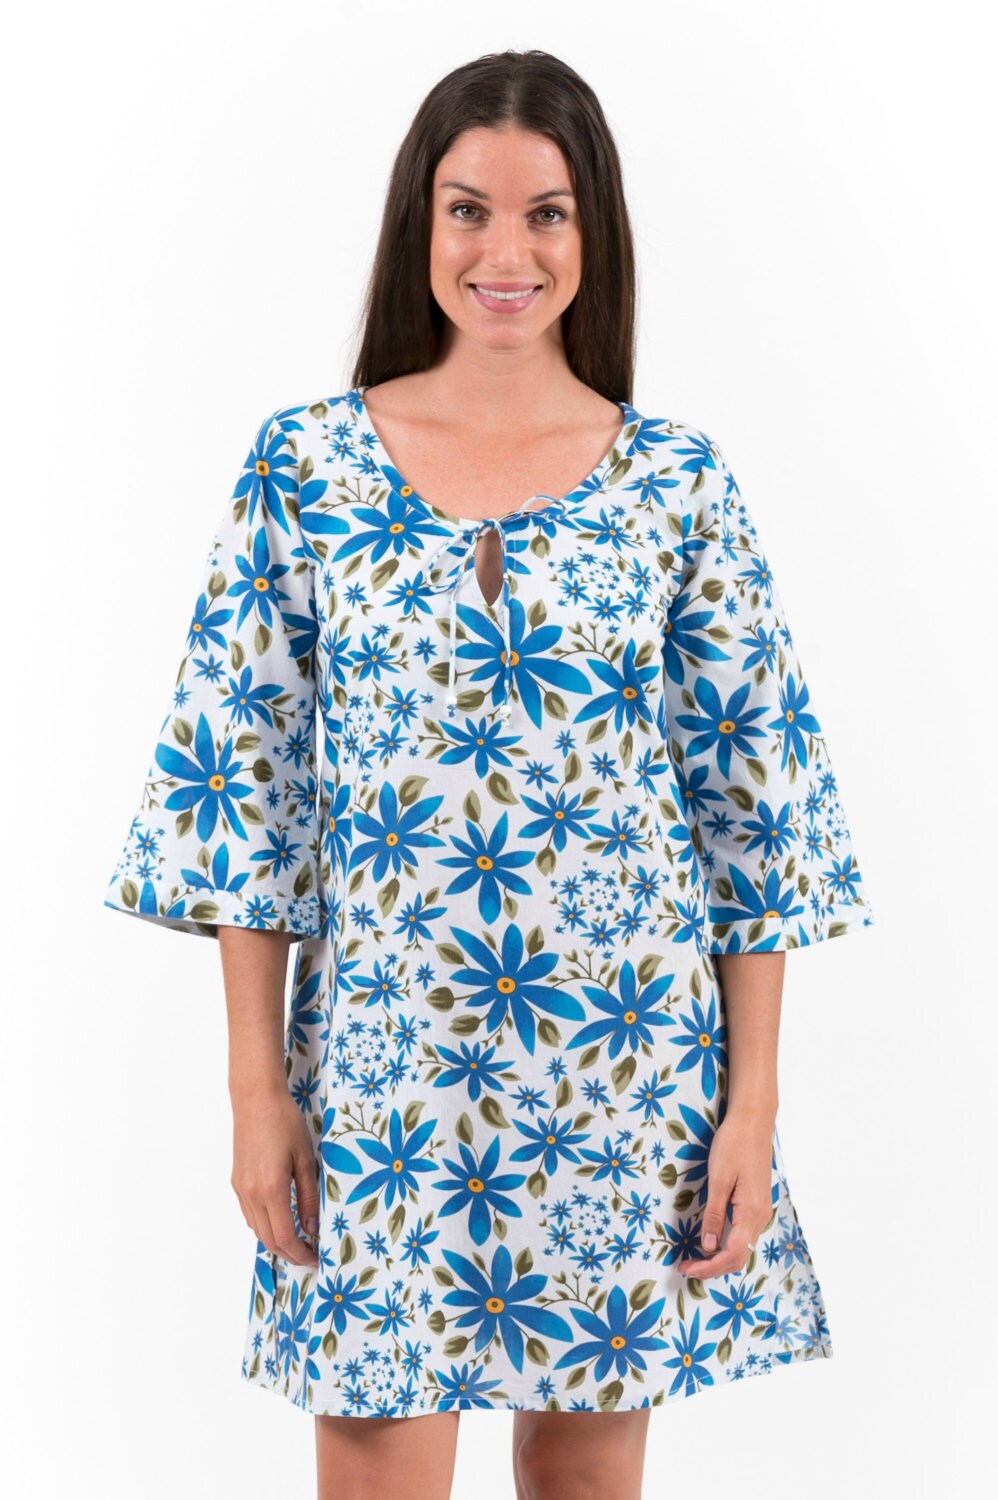 Cotton Tunic Dress by Spirituelle - Aloha Blue Daisy